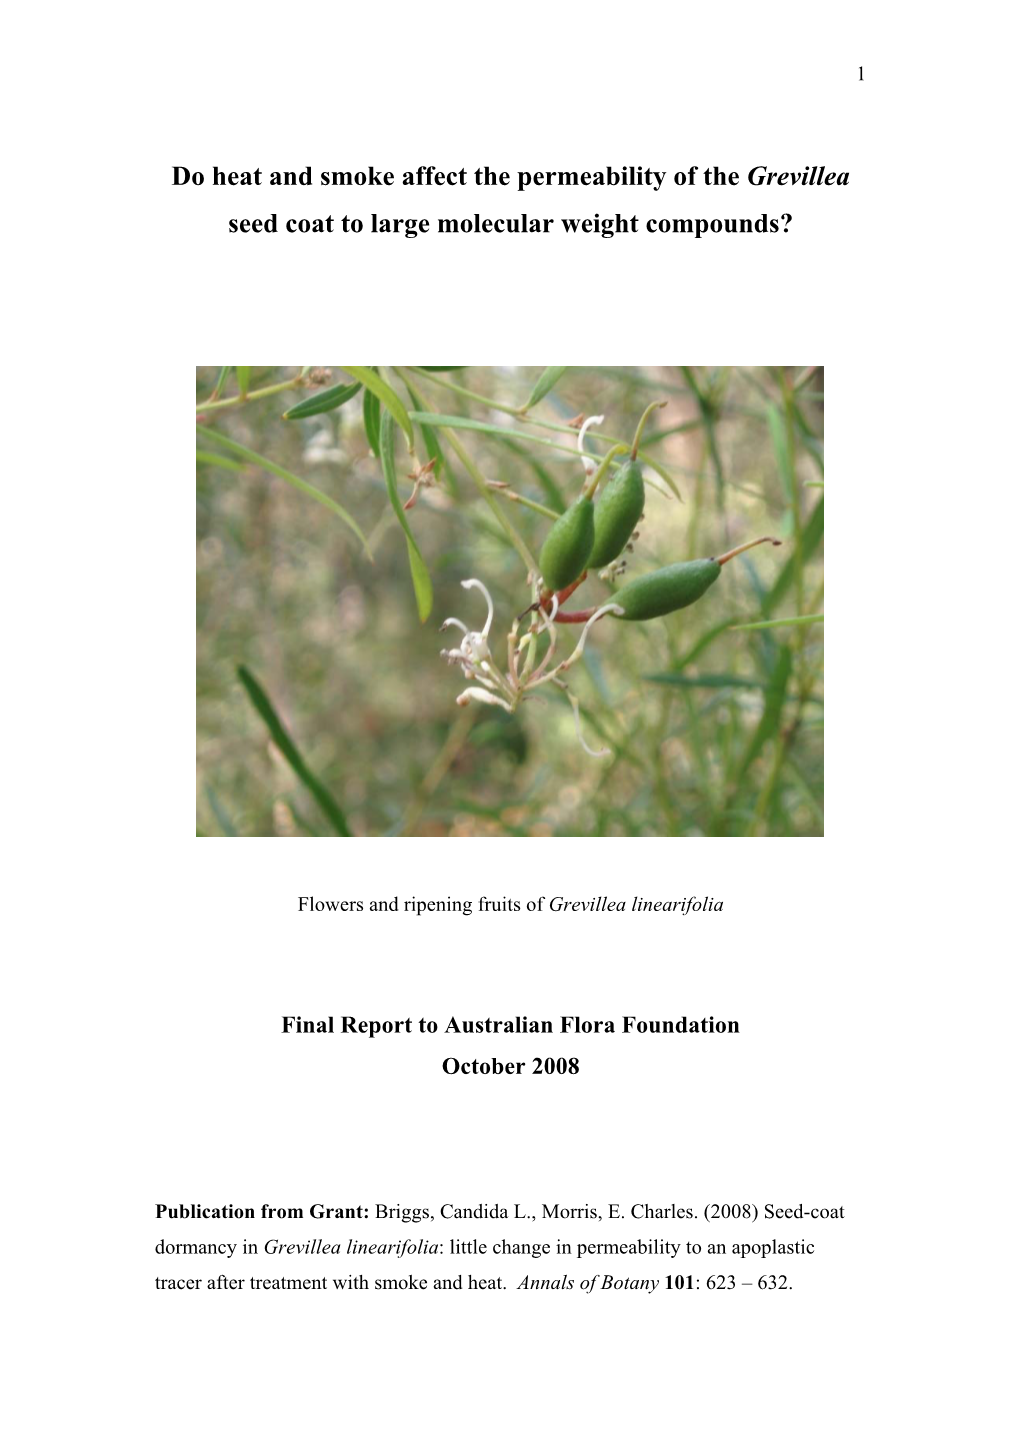 Final Report to Australian Flora Foundation October 2008